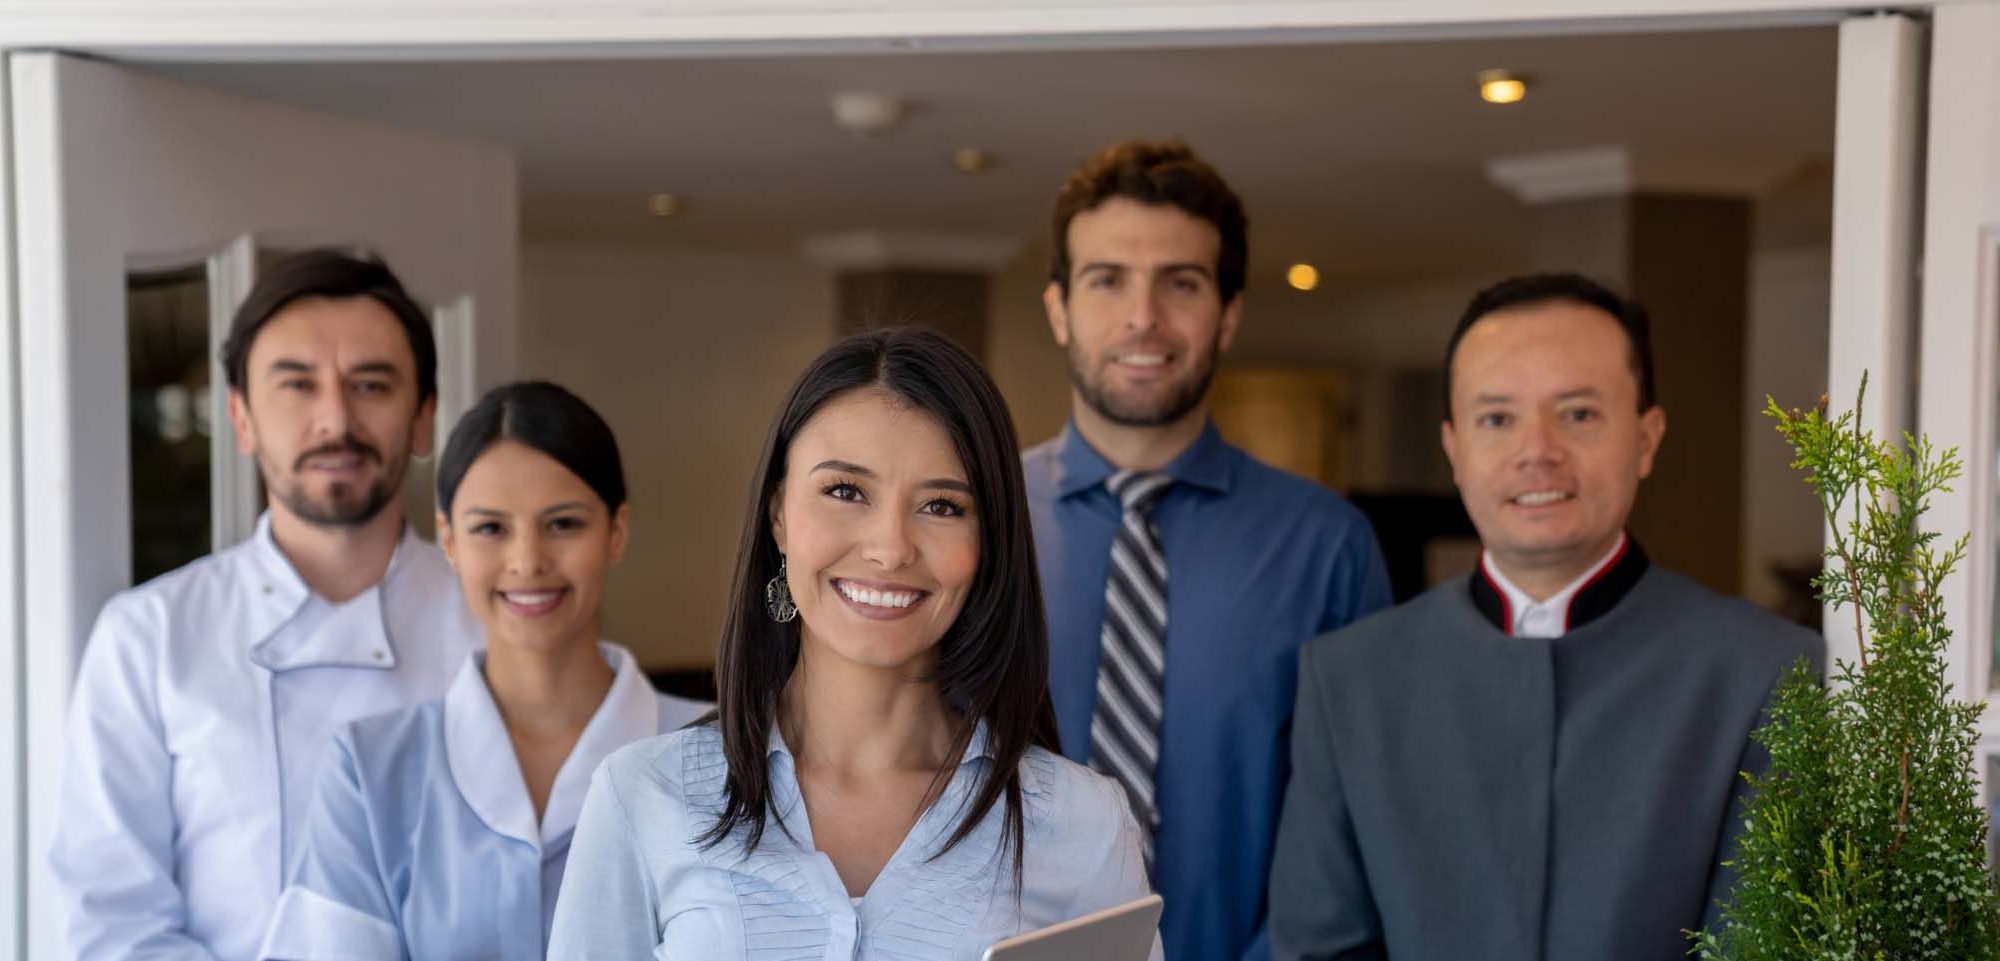 Hotel Employee Rate | Team Member Benefits